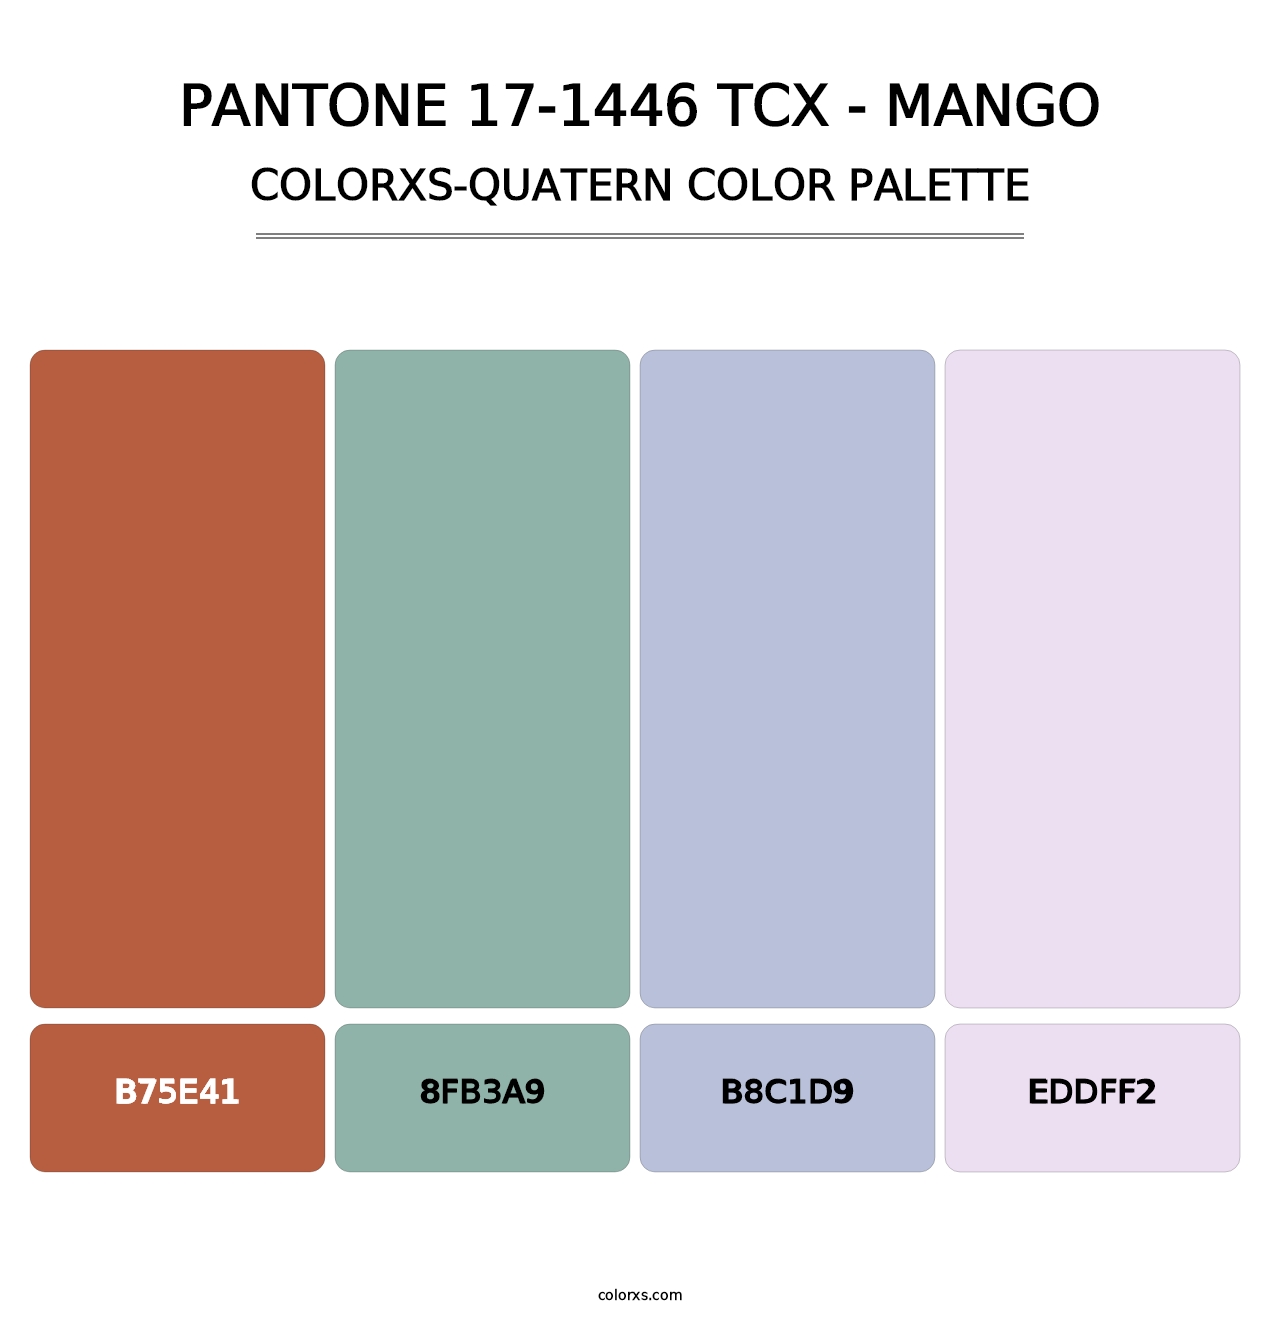 PANTONE 17-1446 TCX - Mango - Colorxs Quatern Palette